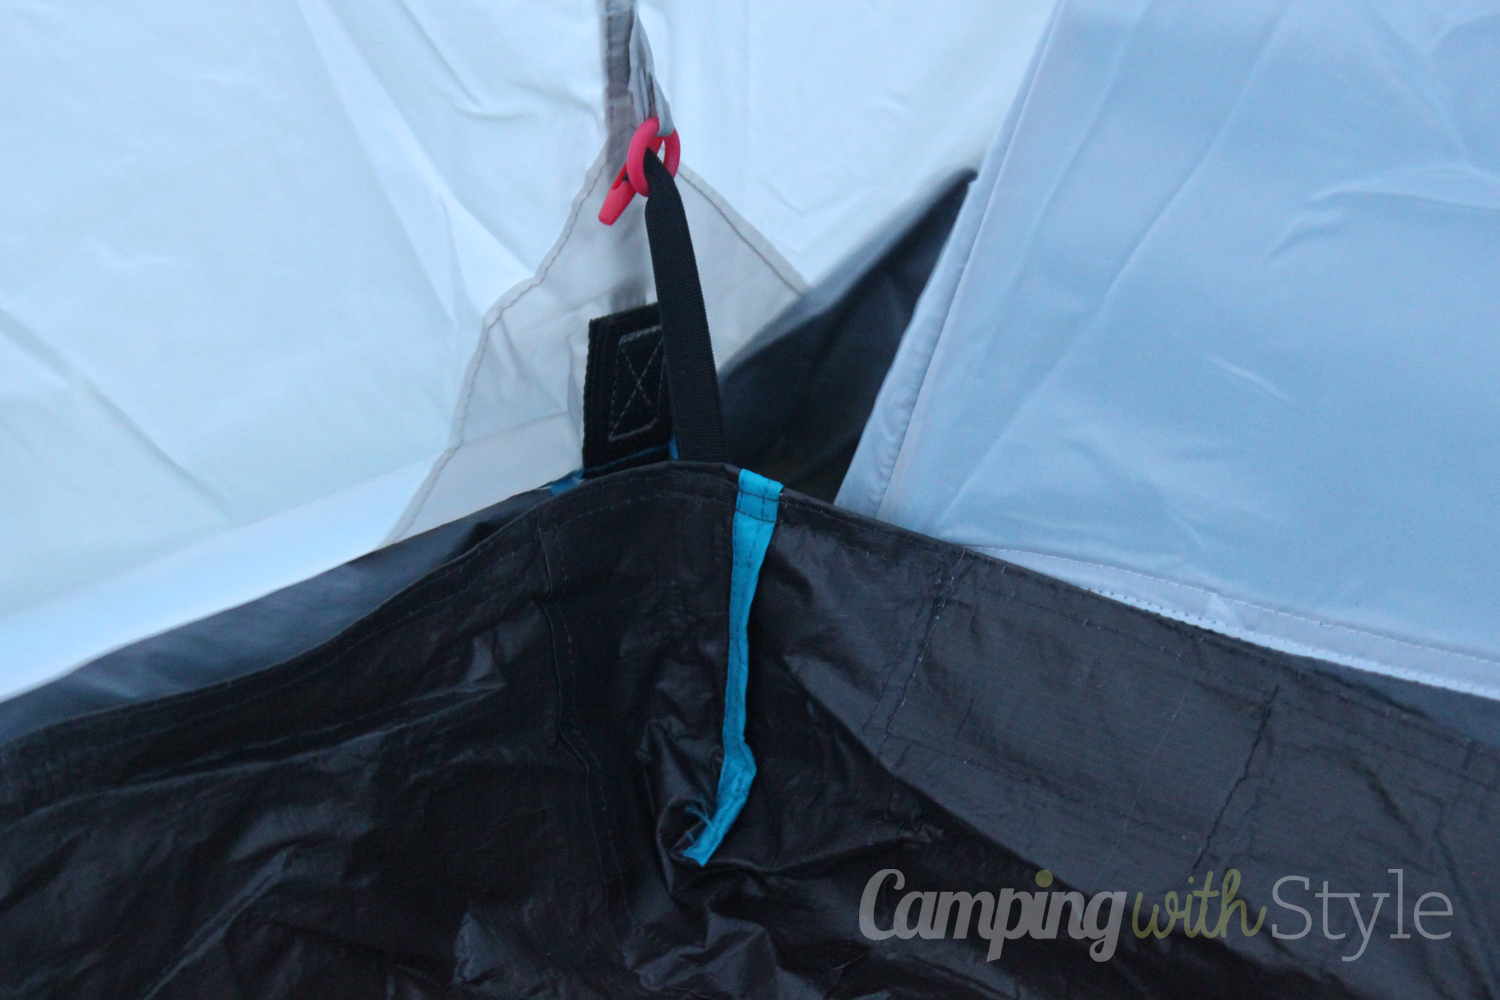 decathlon 1 person tent